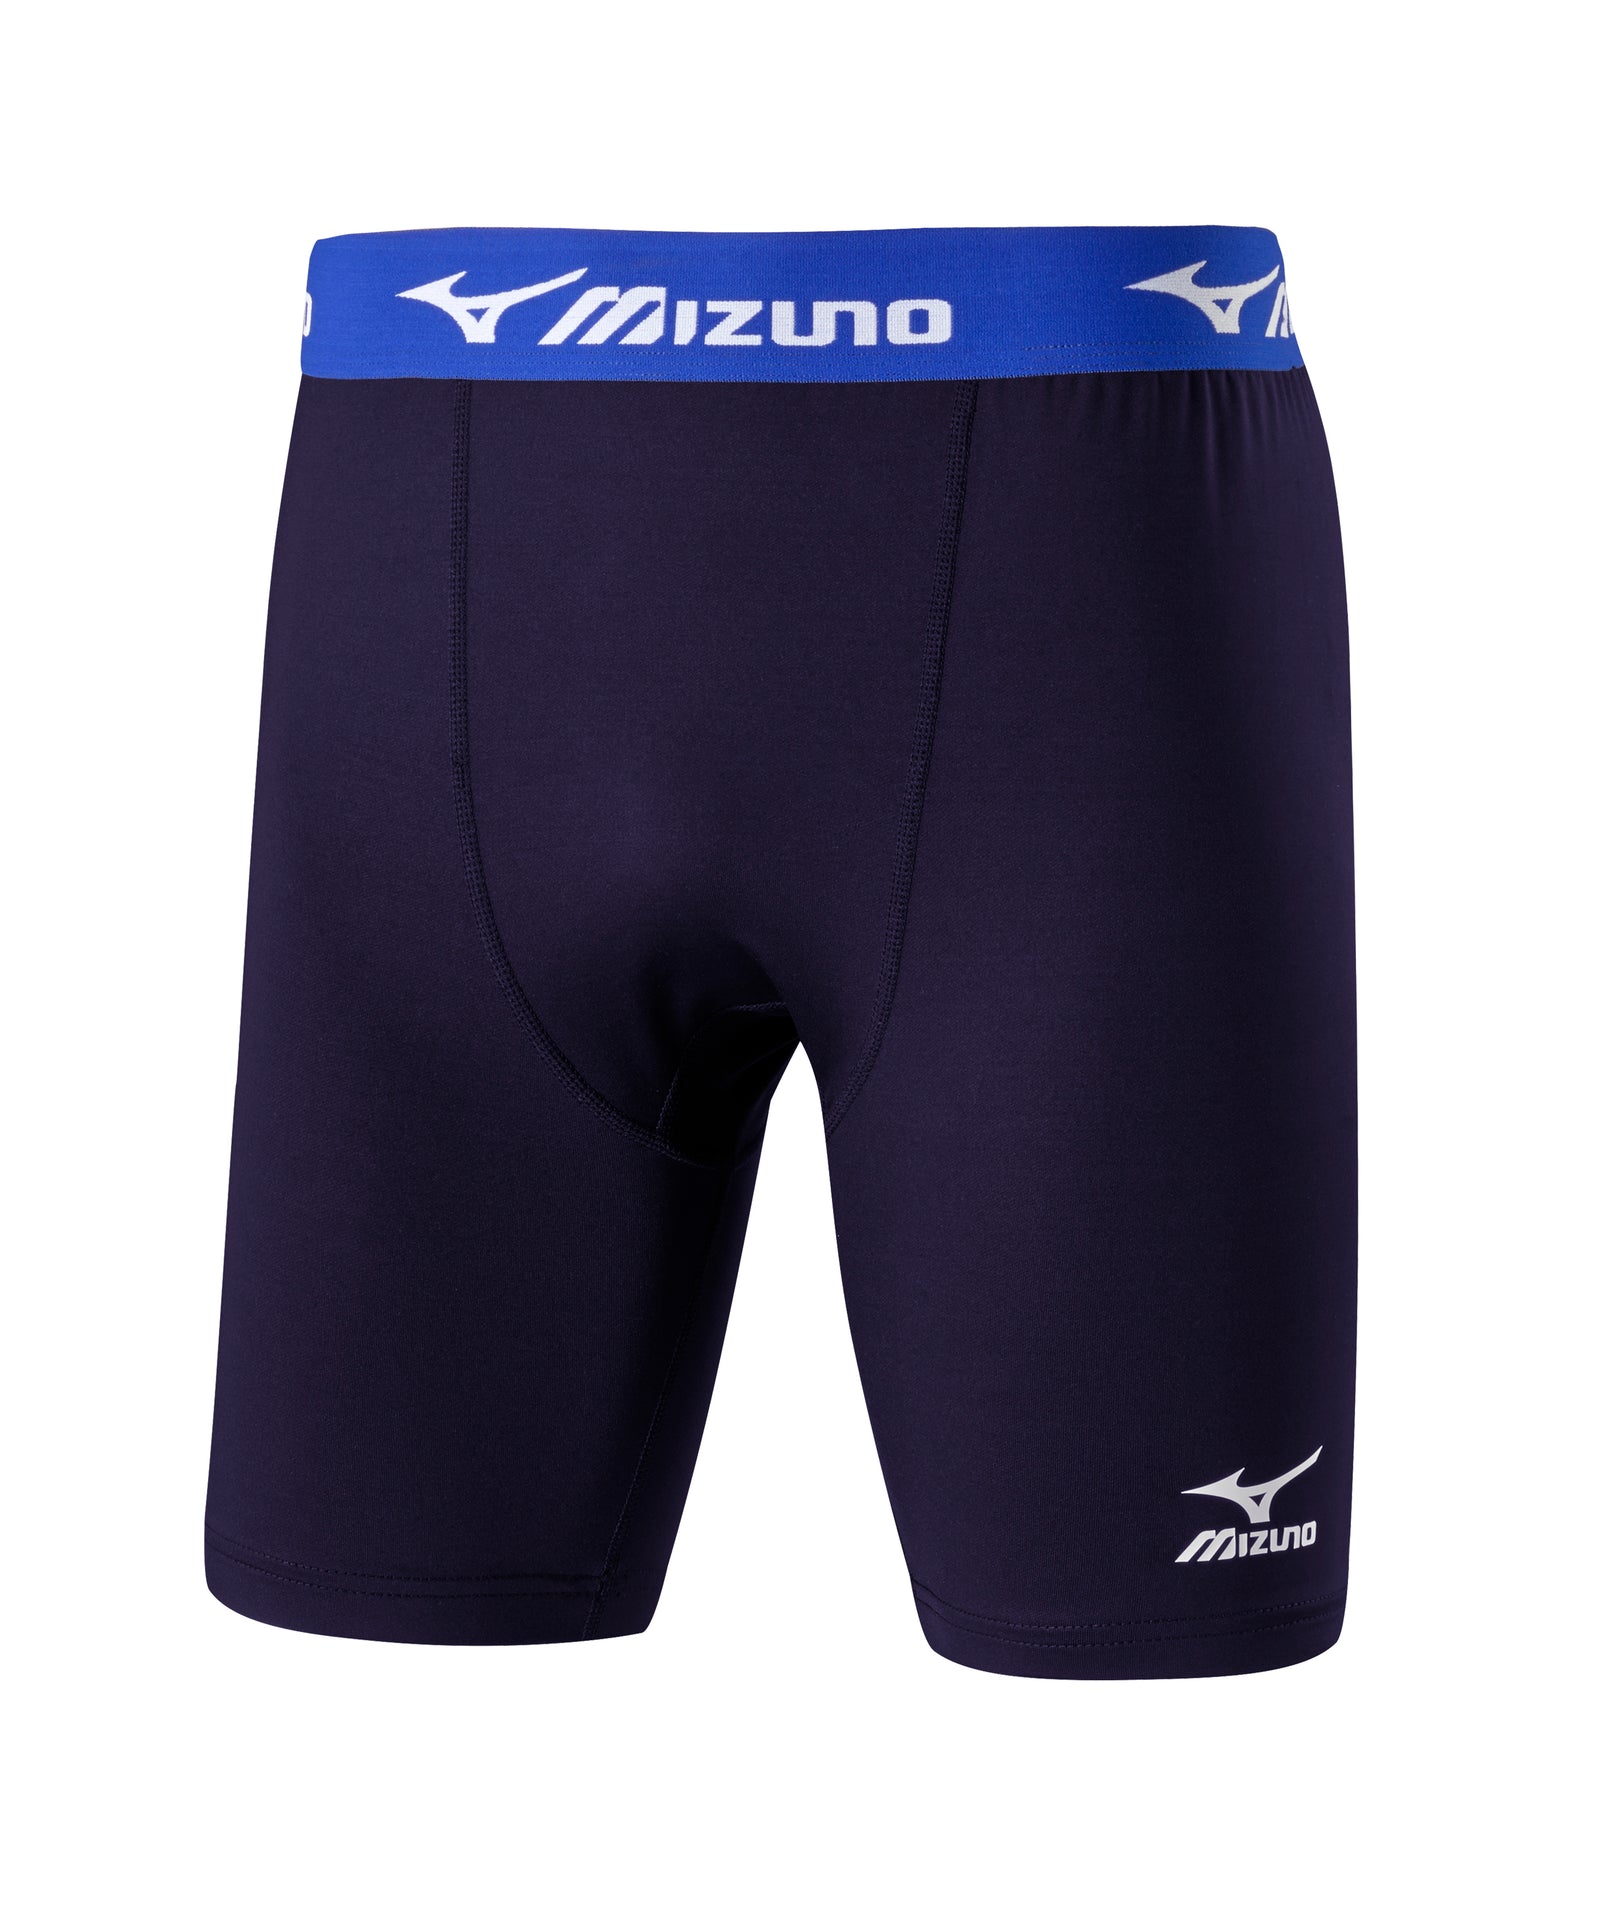 Mizuno Rowing Base Shorts